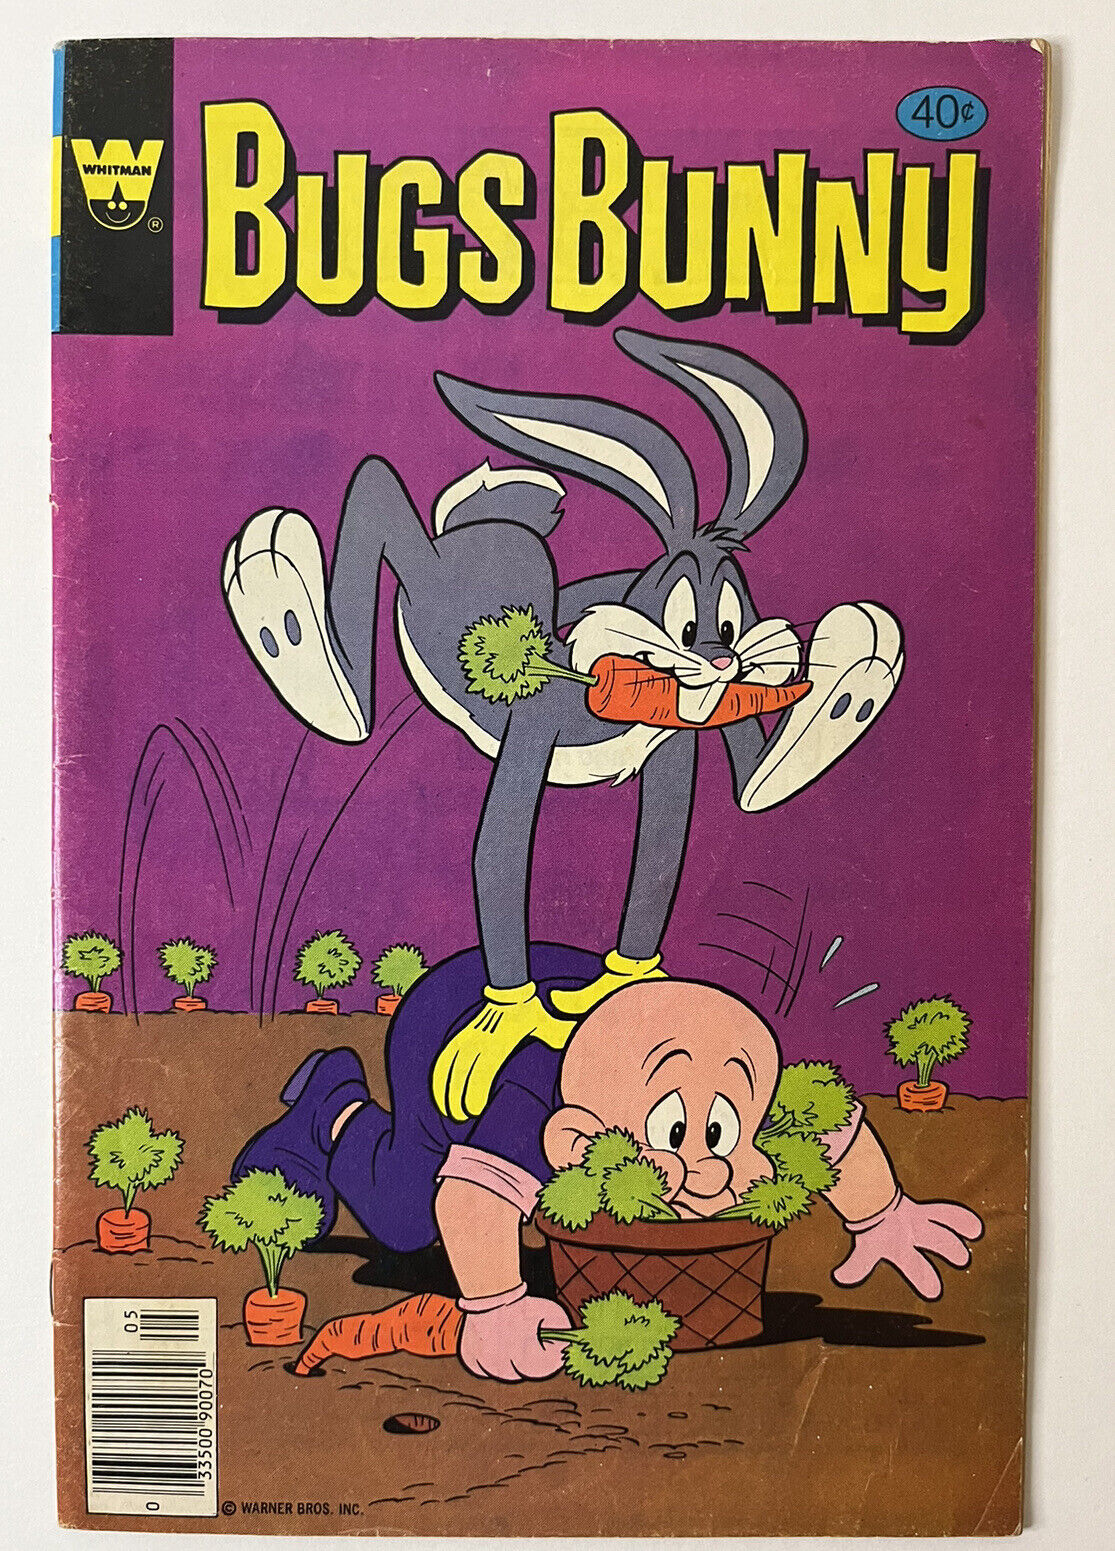 Bugs Bunny #208 May 1979 ✅ Warner Bros. Inc. ✅ Bronze Age ✅ Comic Book